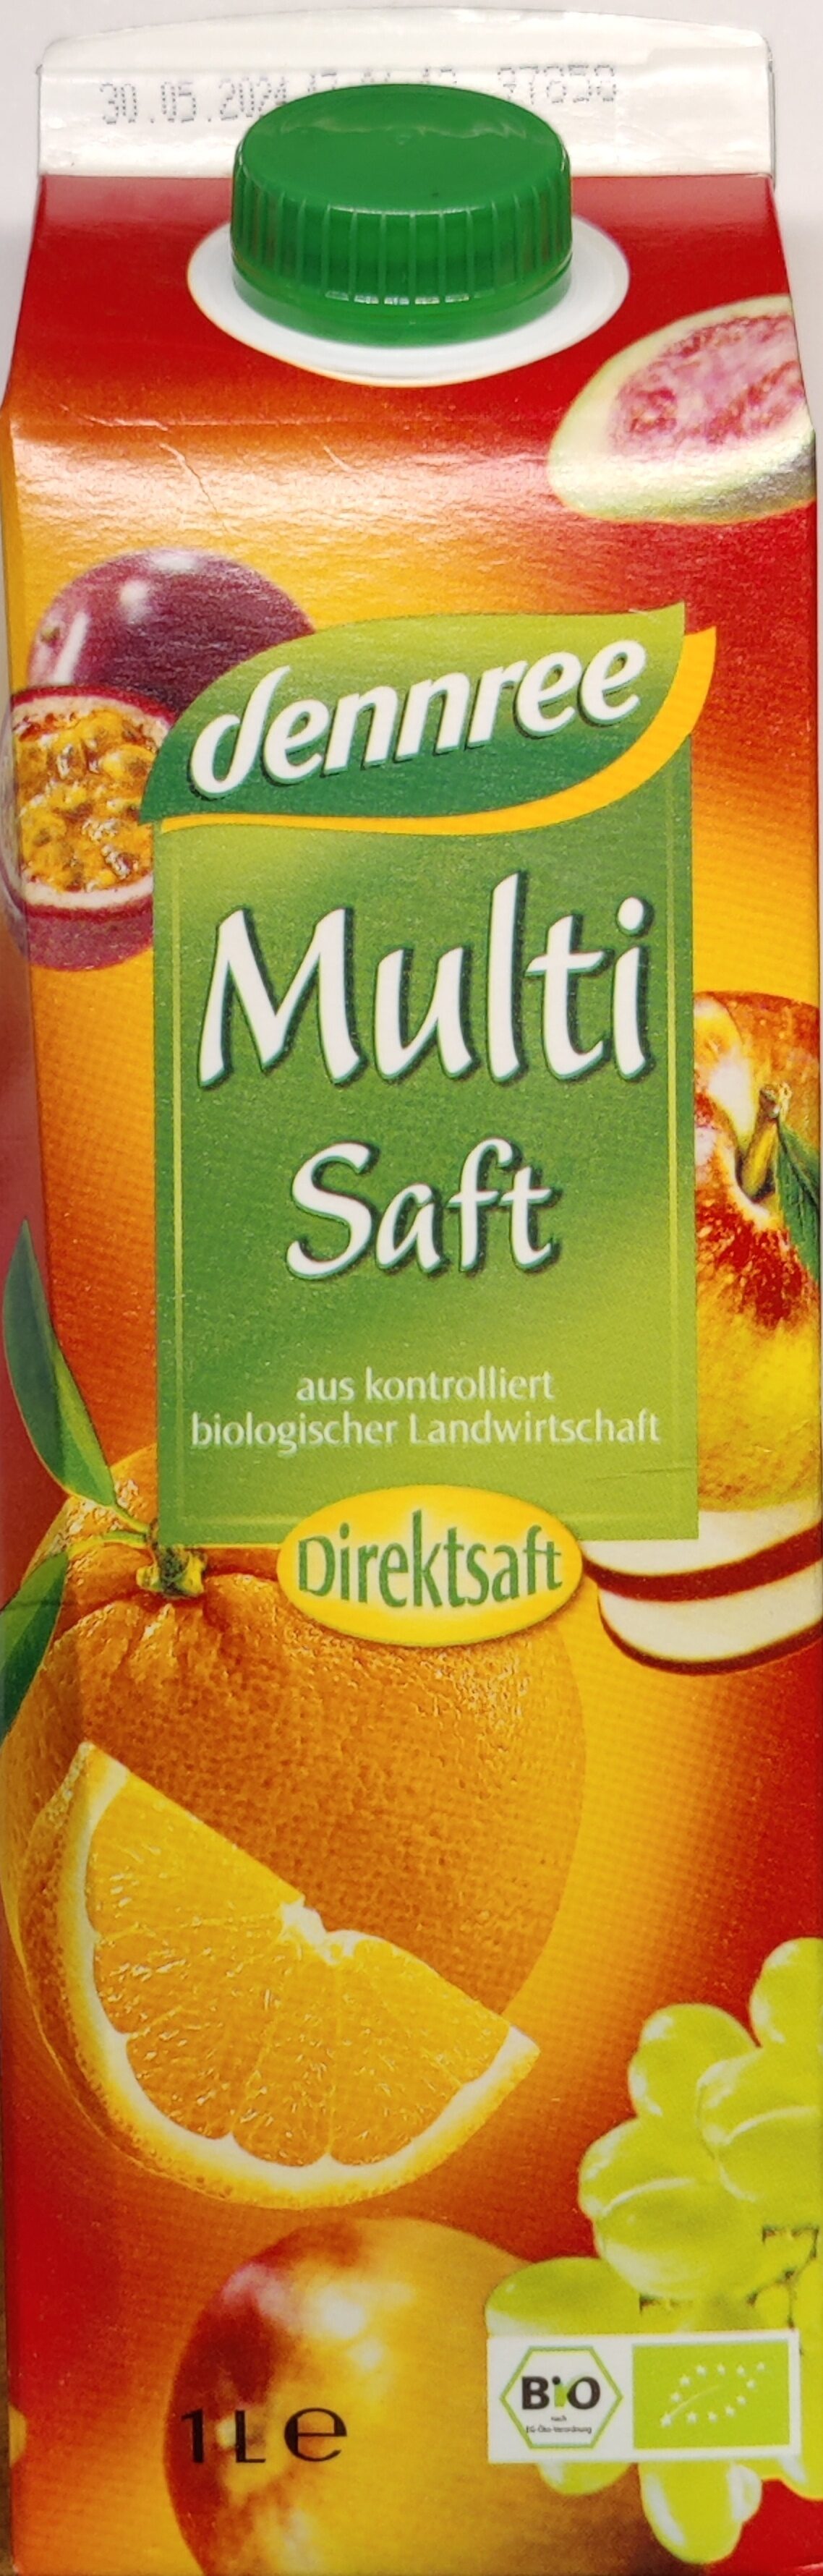 Multisaft - Produkt